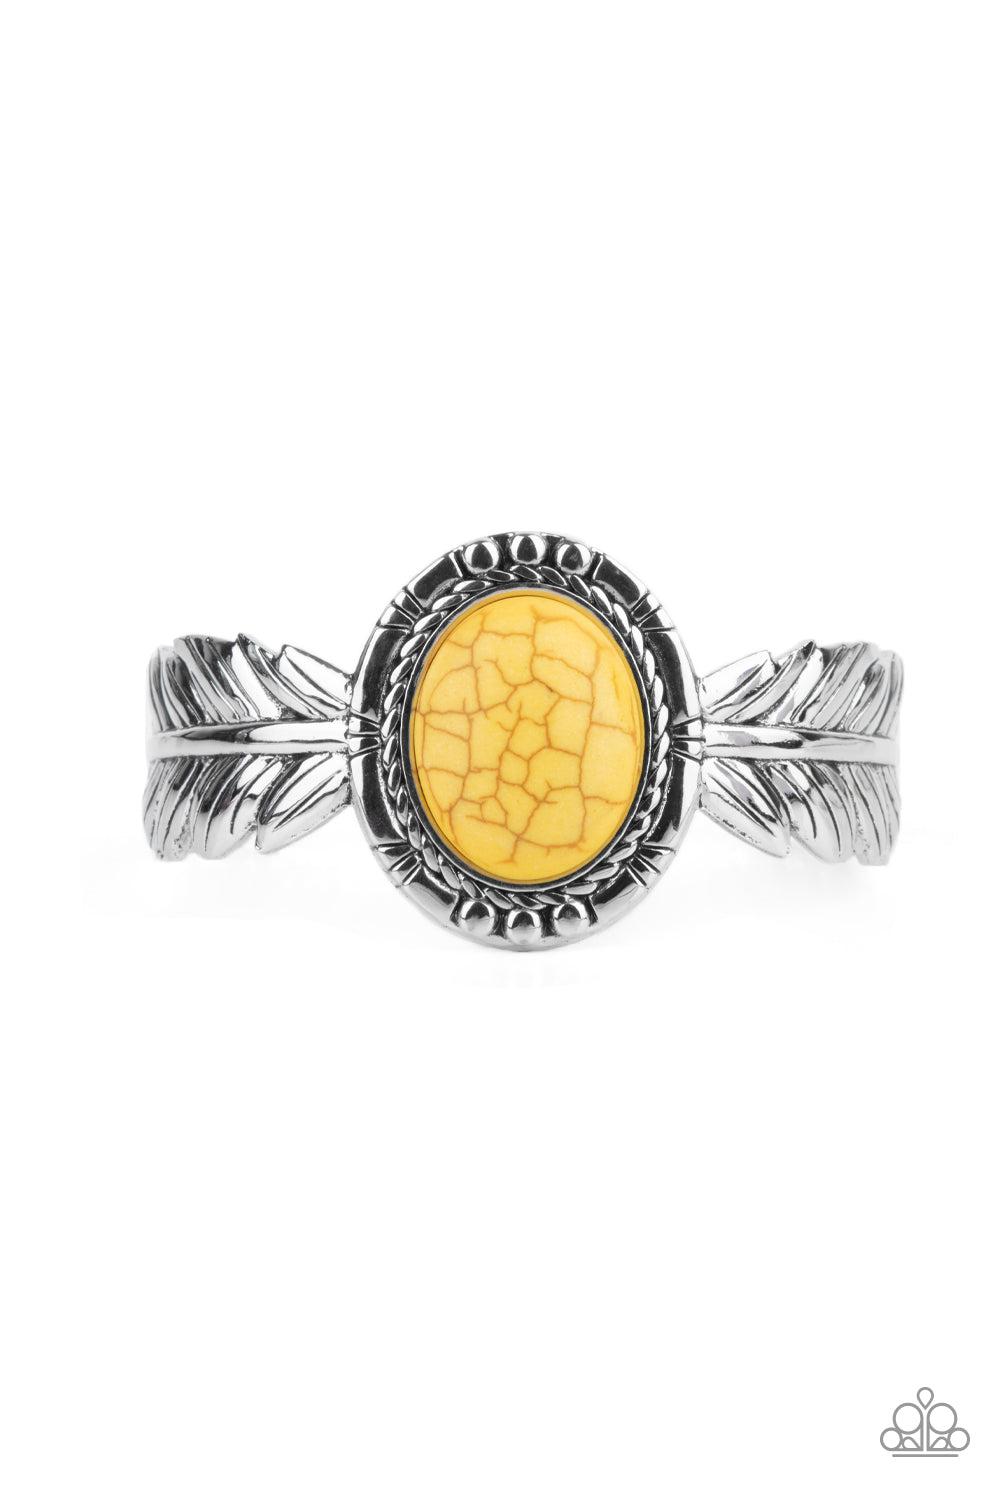 Western Wings Yellow Stone Cuff Bracelet - Paparazzi Accessories- lightbox - CarasShop.com - $5 Jewelry by Cara Jewels